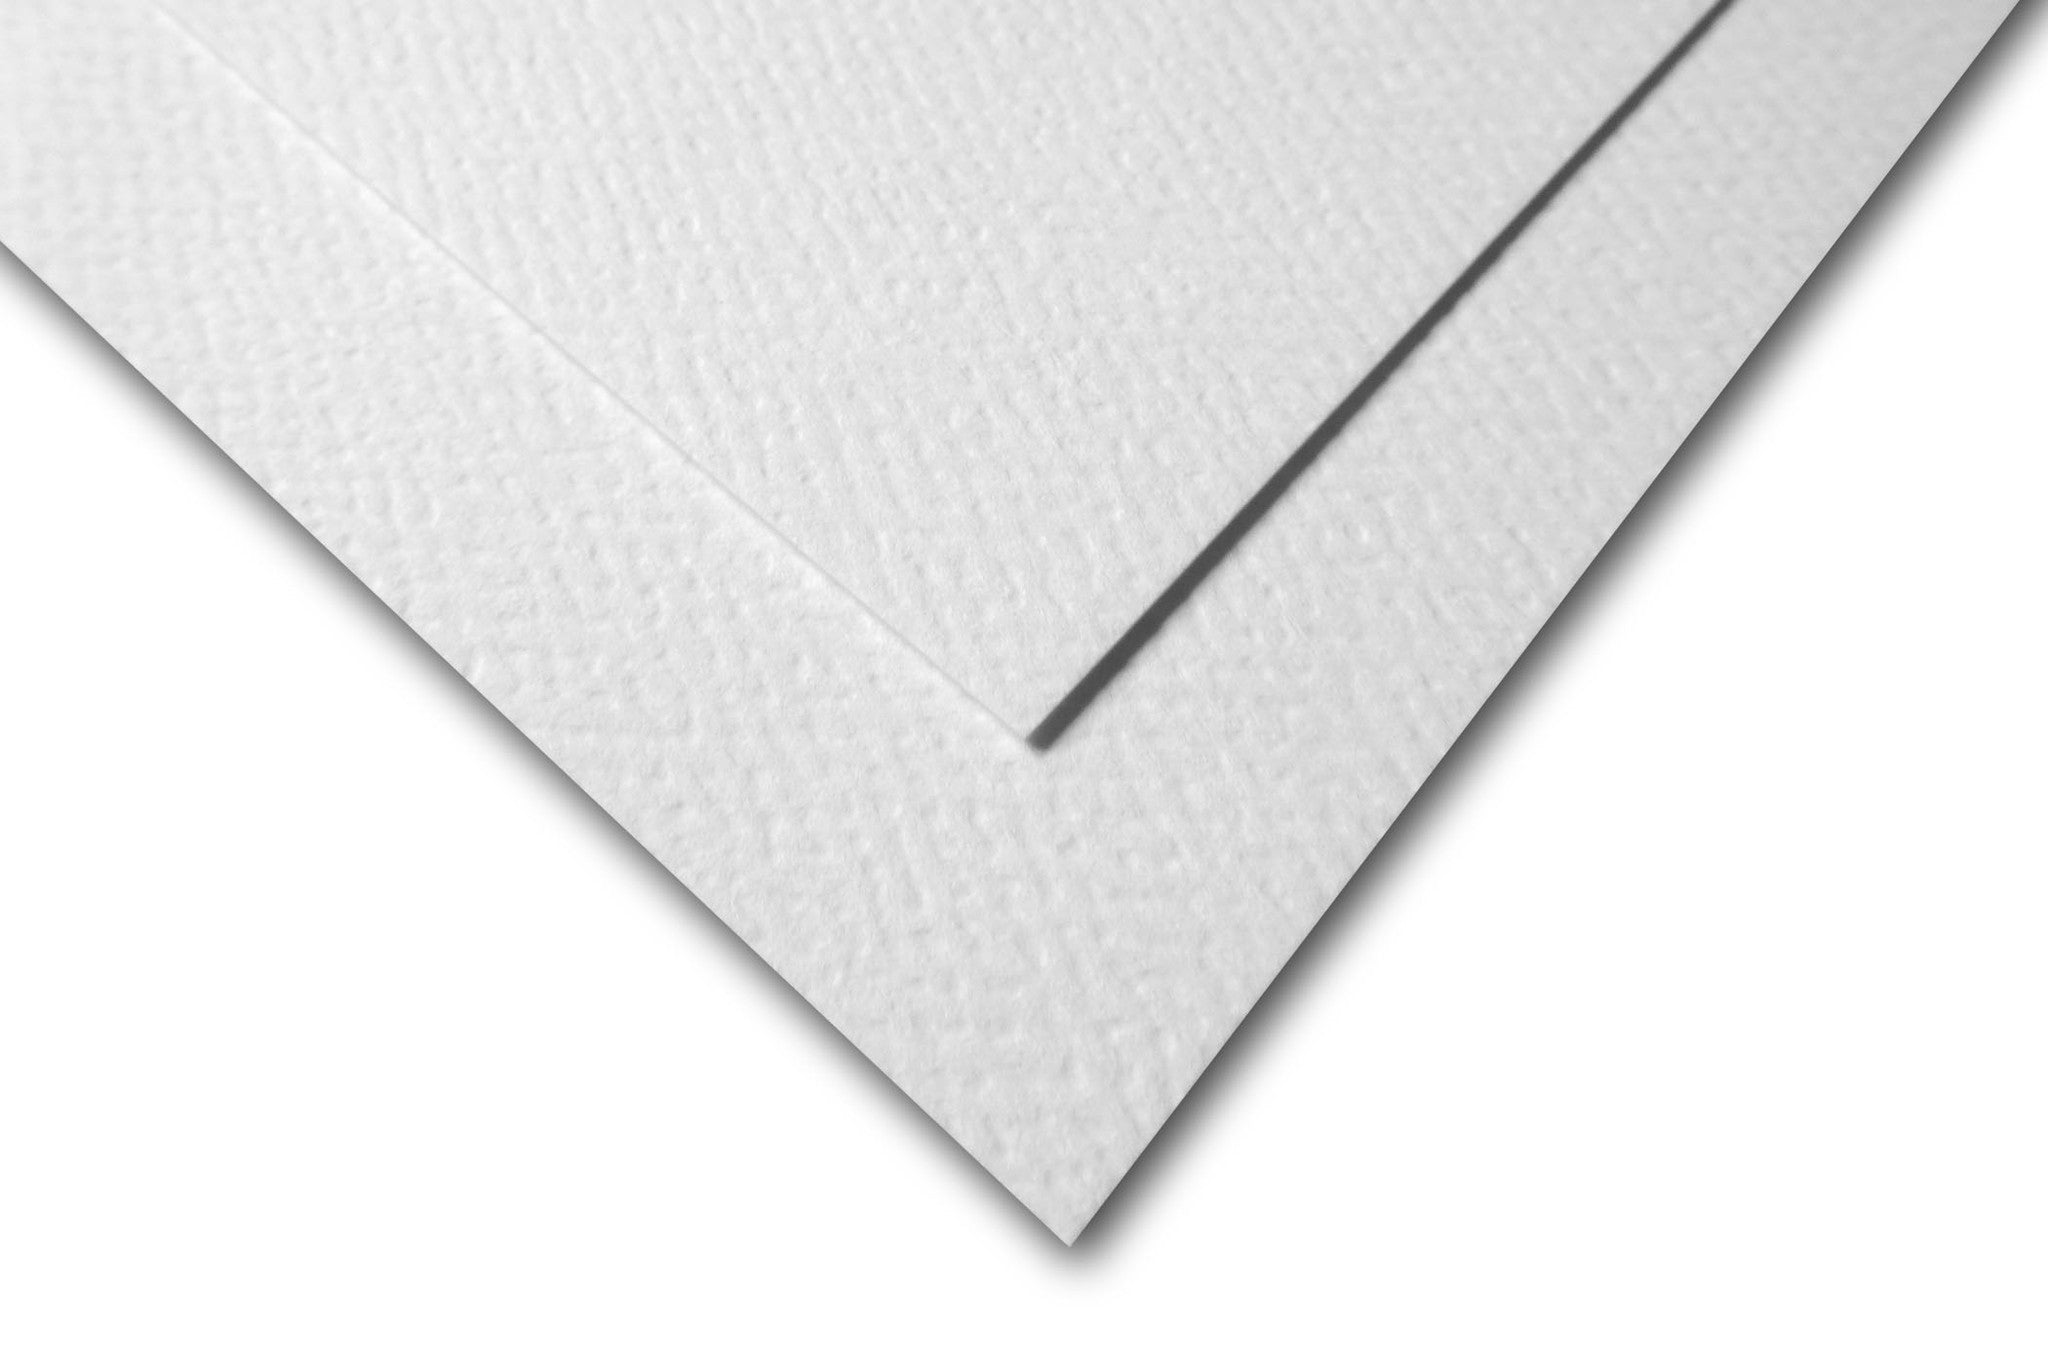 Royal Sundance White FELT Card Stock adds texture for DIY invitations -  CutCardStock